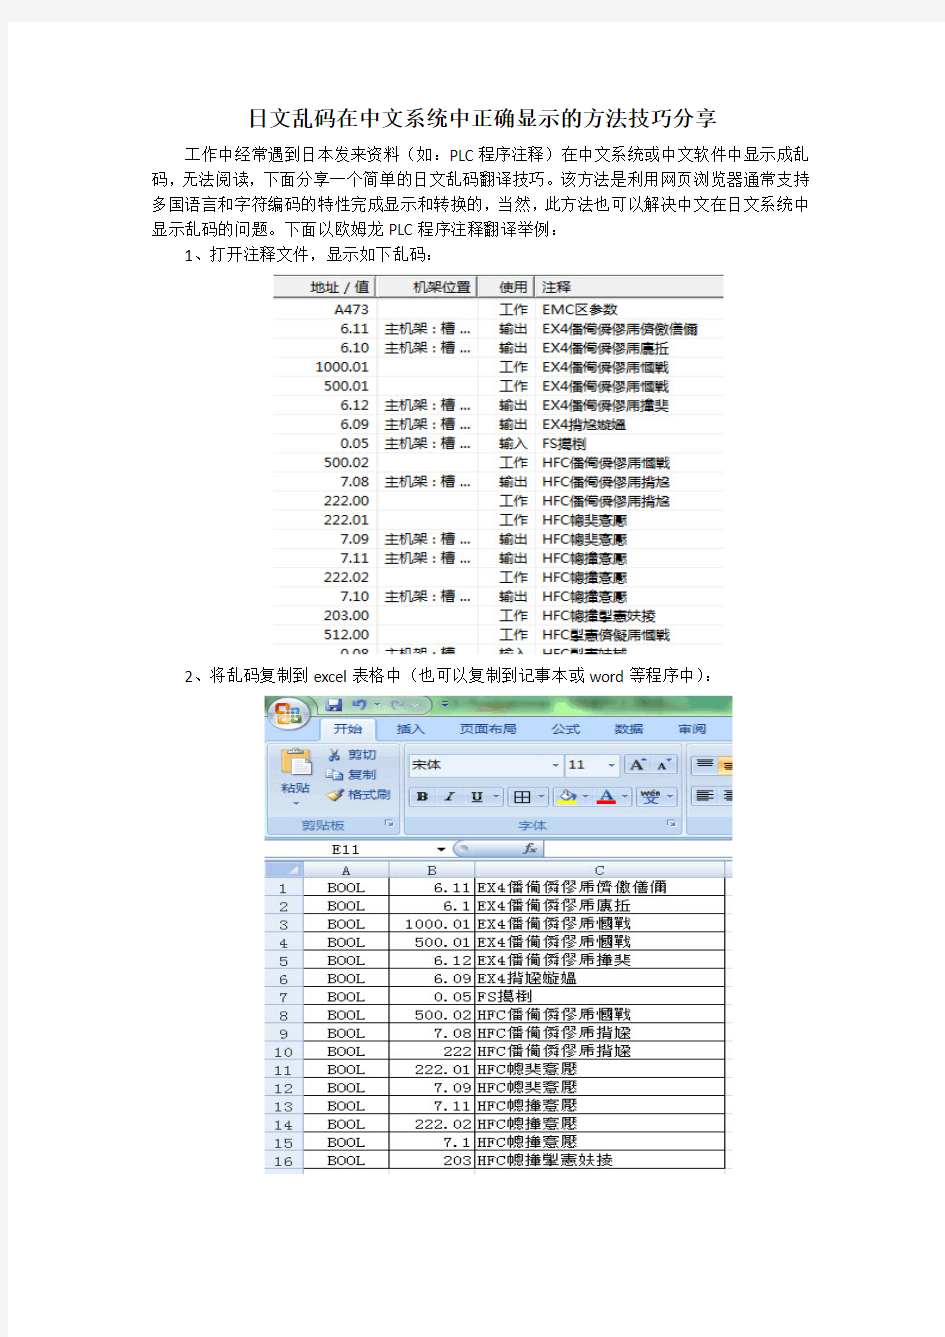 PLC程序日文注释乱码怎么显示中文